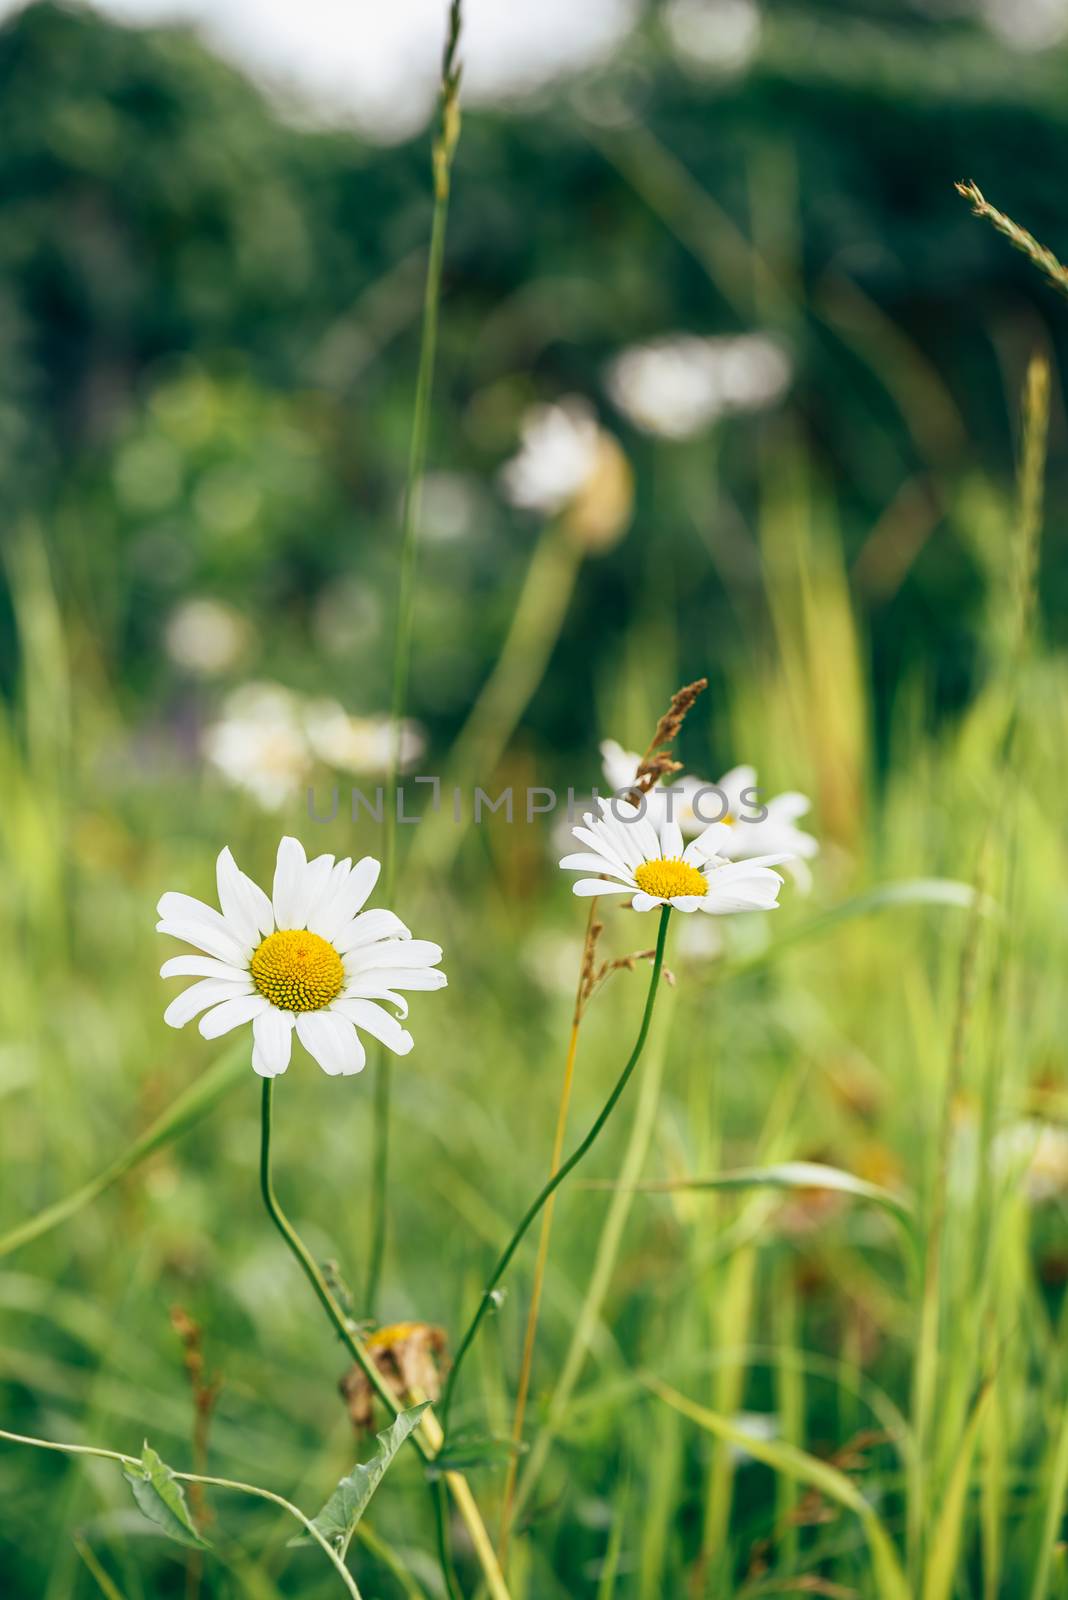 Daisy Flowers on Lawn. by Seva_blsv